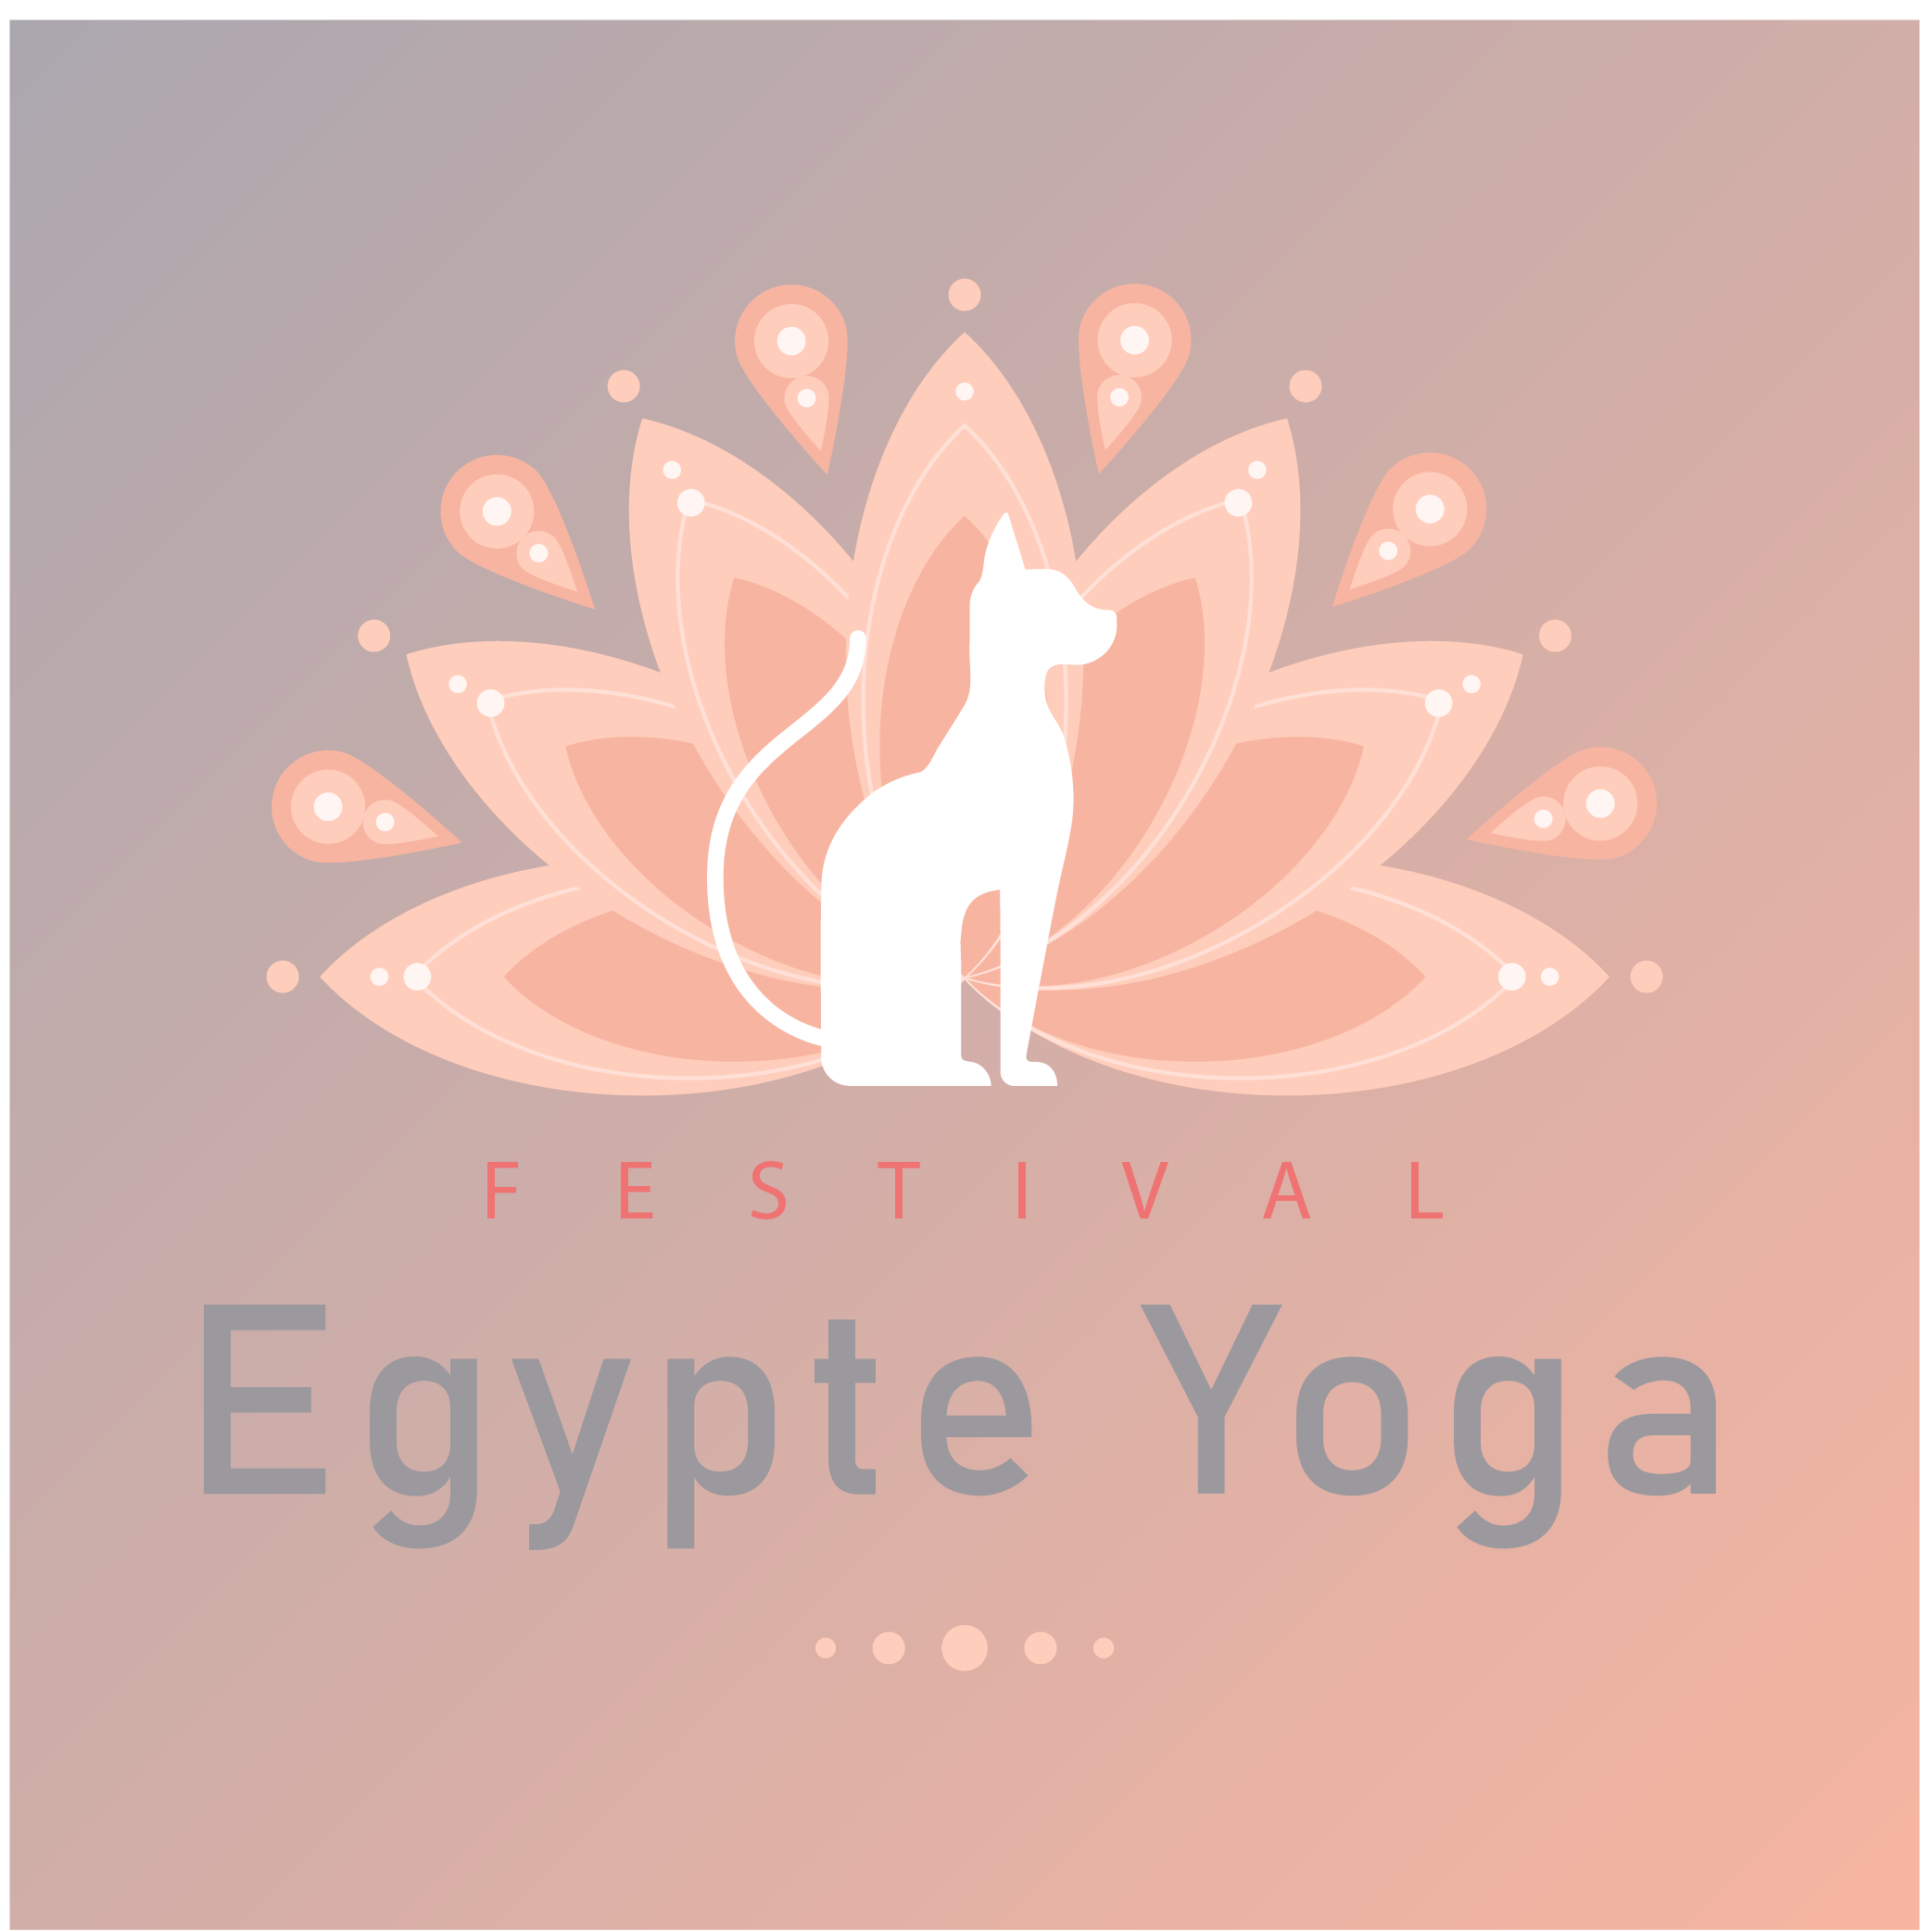 egypte yoga festival logo favicon